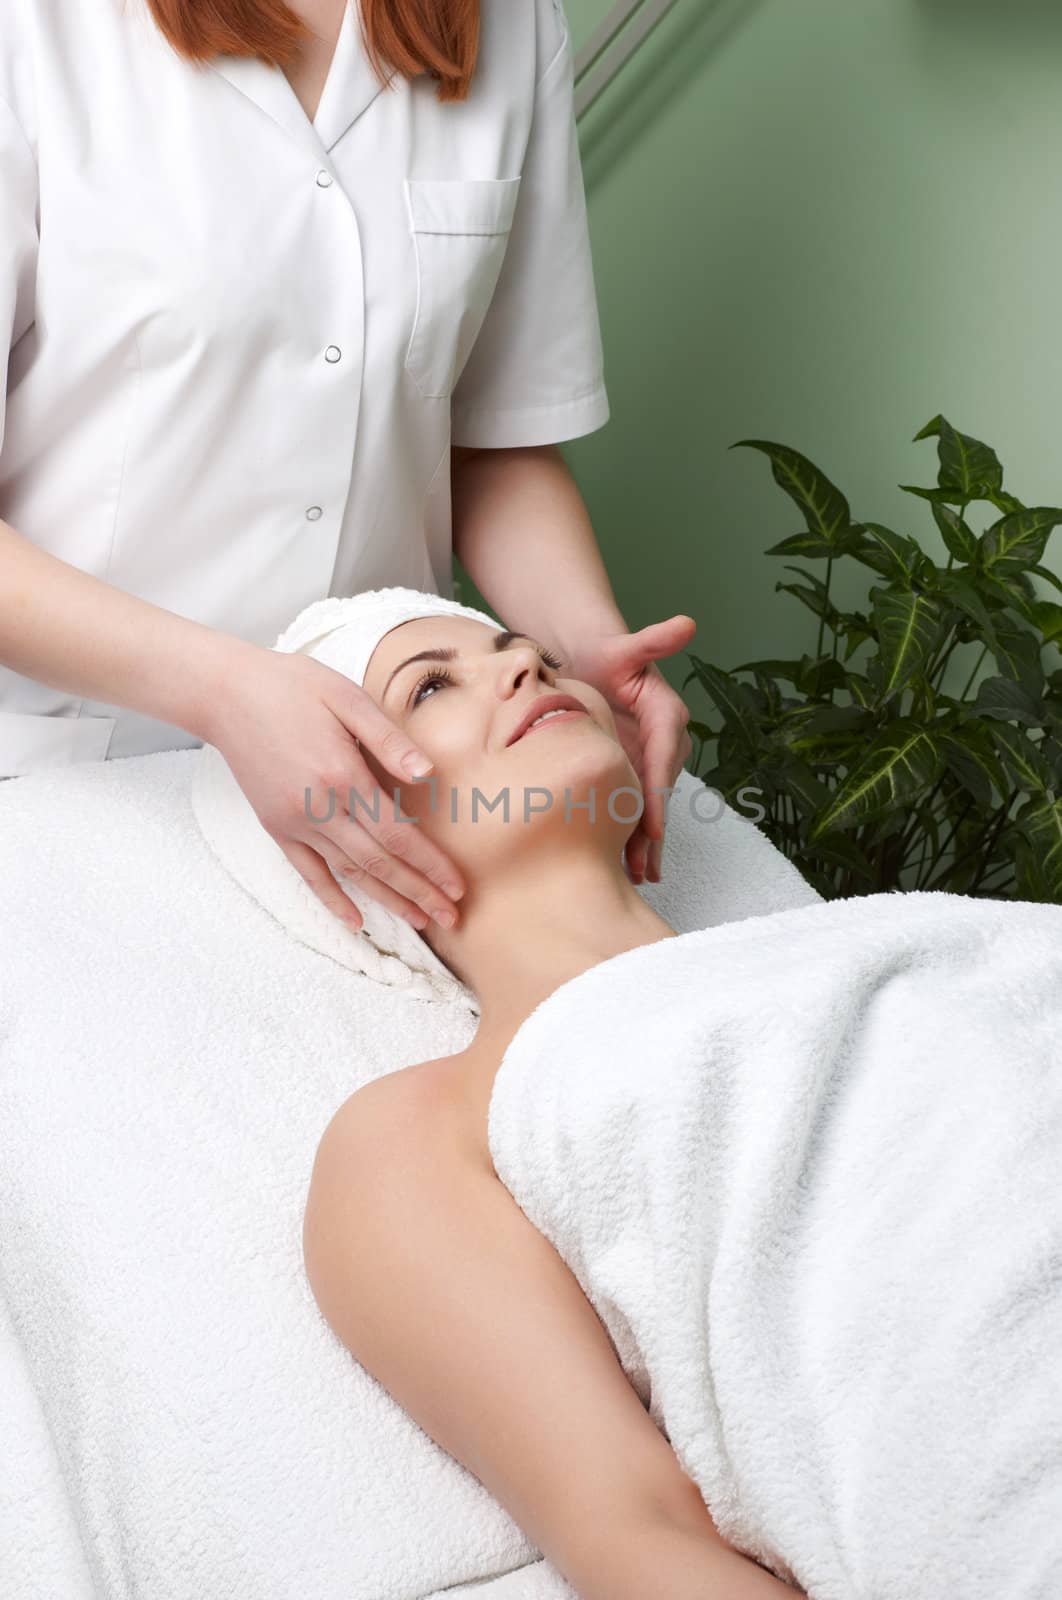 pretty woman getting facial massage in the beauty salon